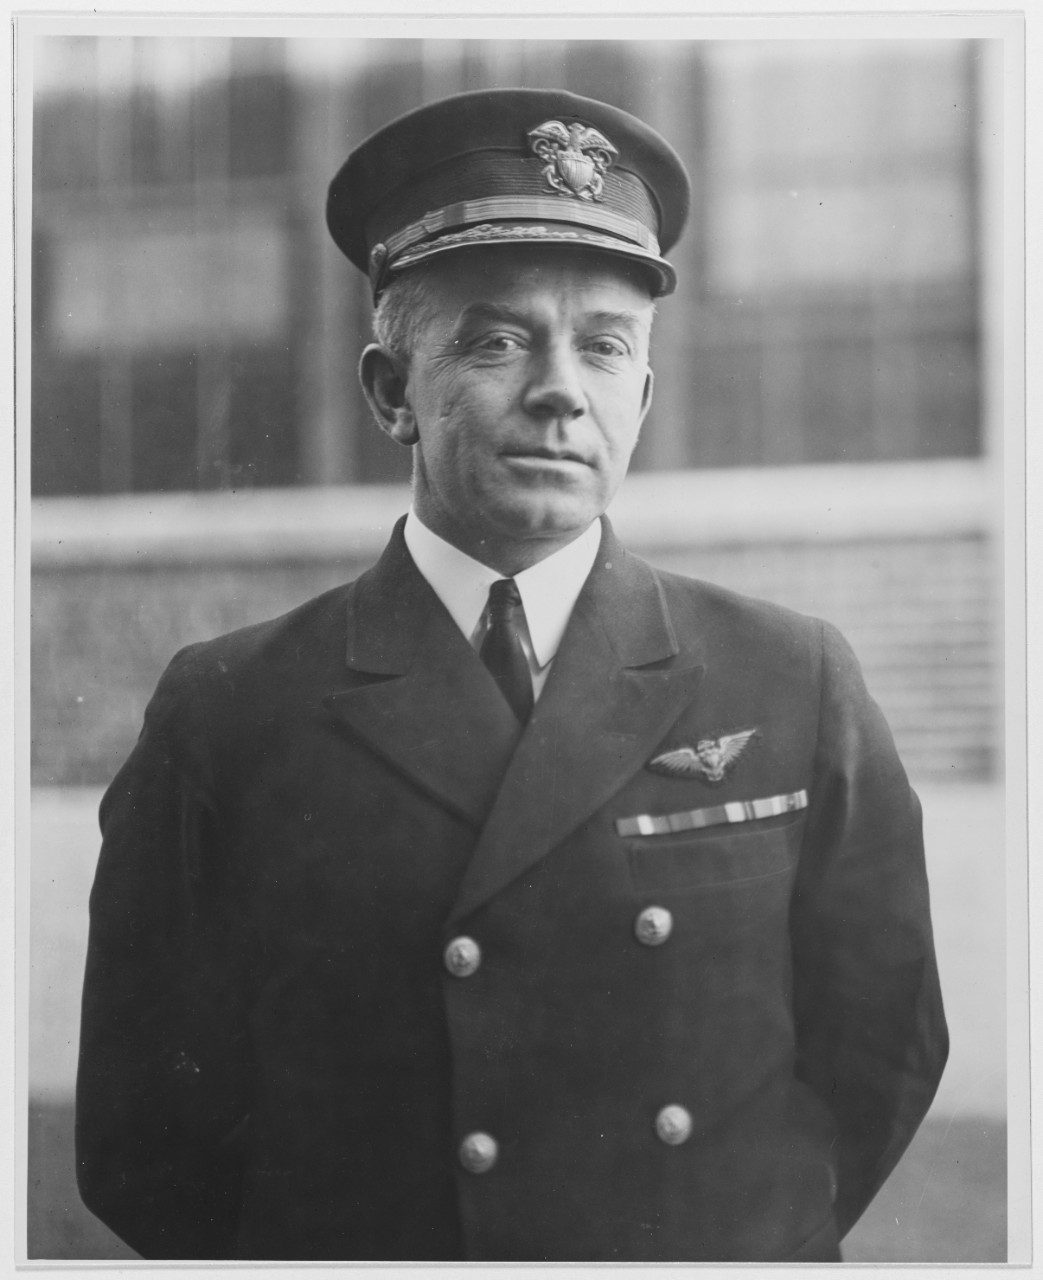 Lieutenant Theodore G. Ellyson, USN